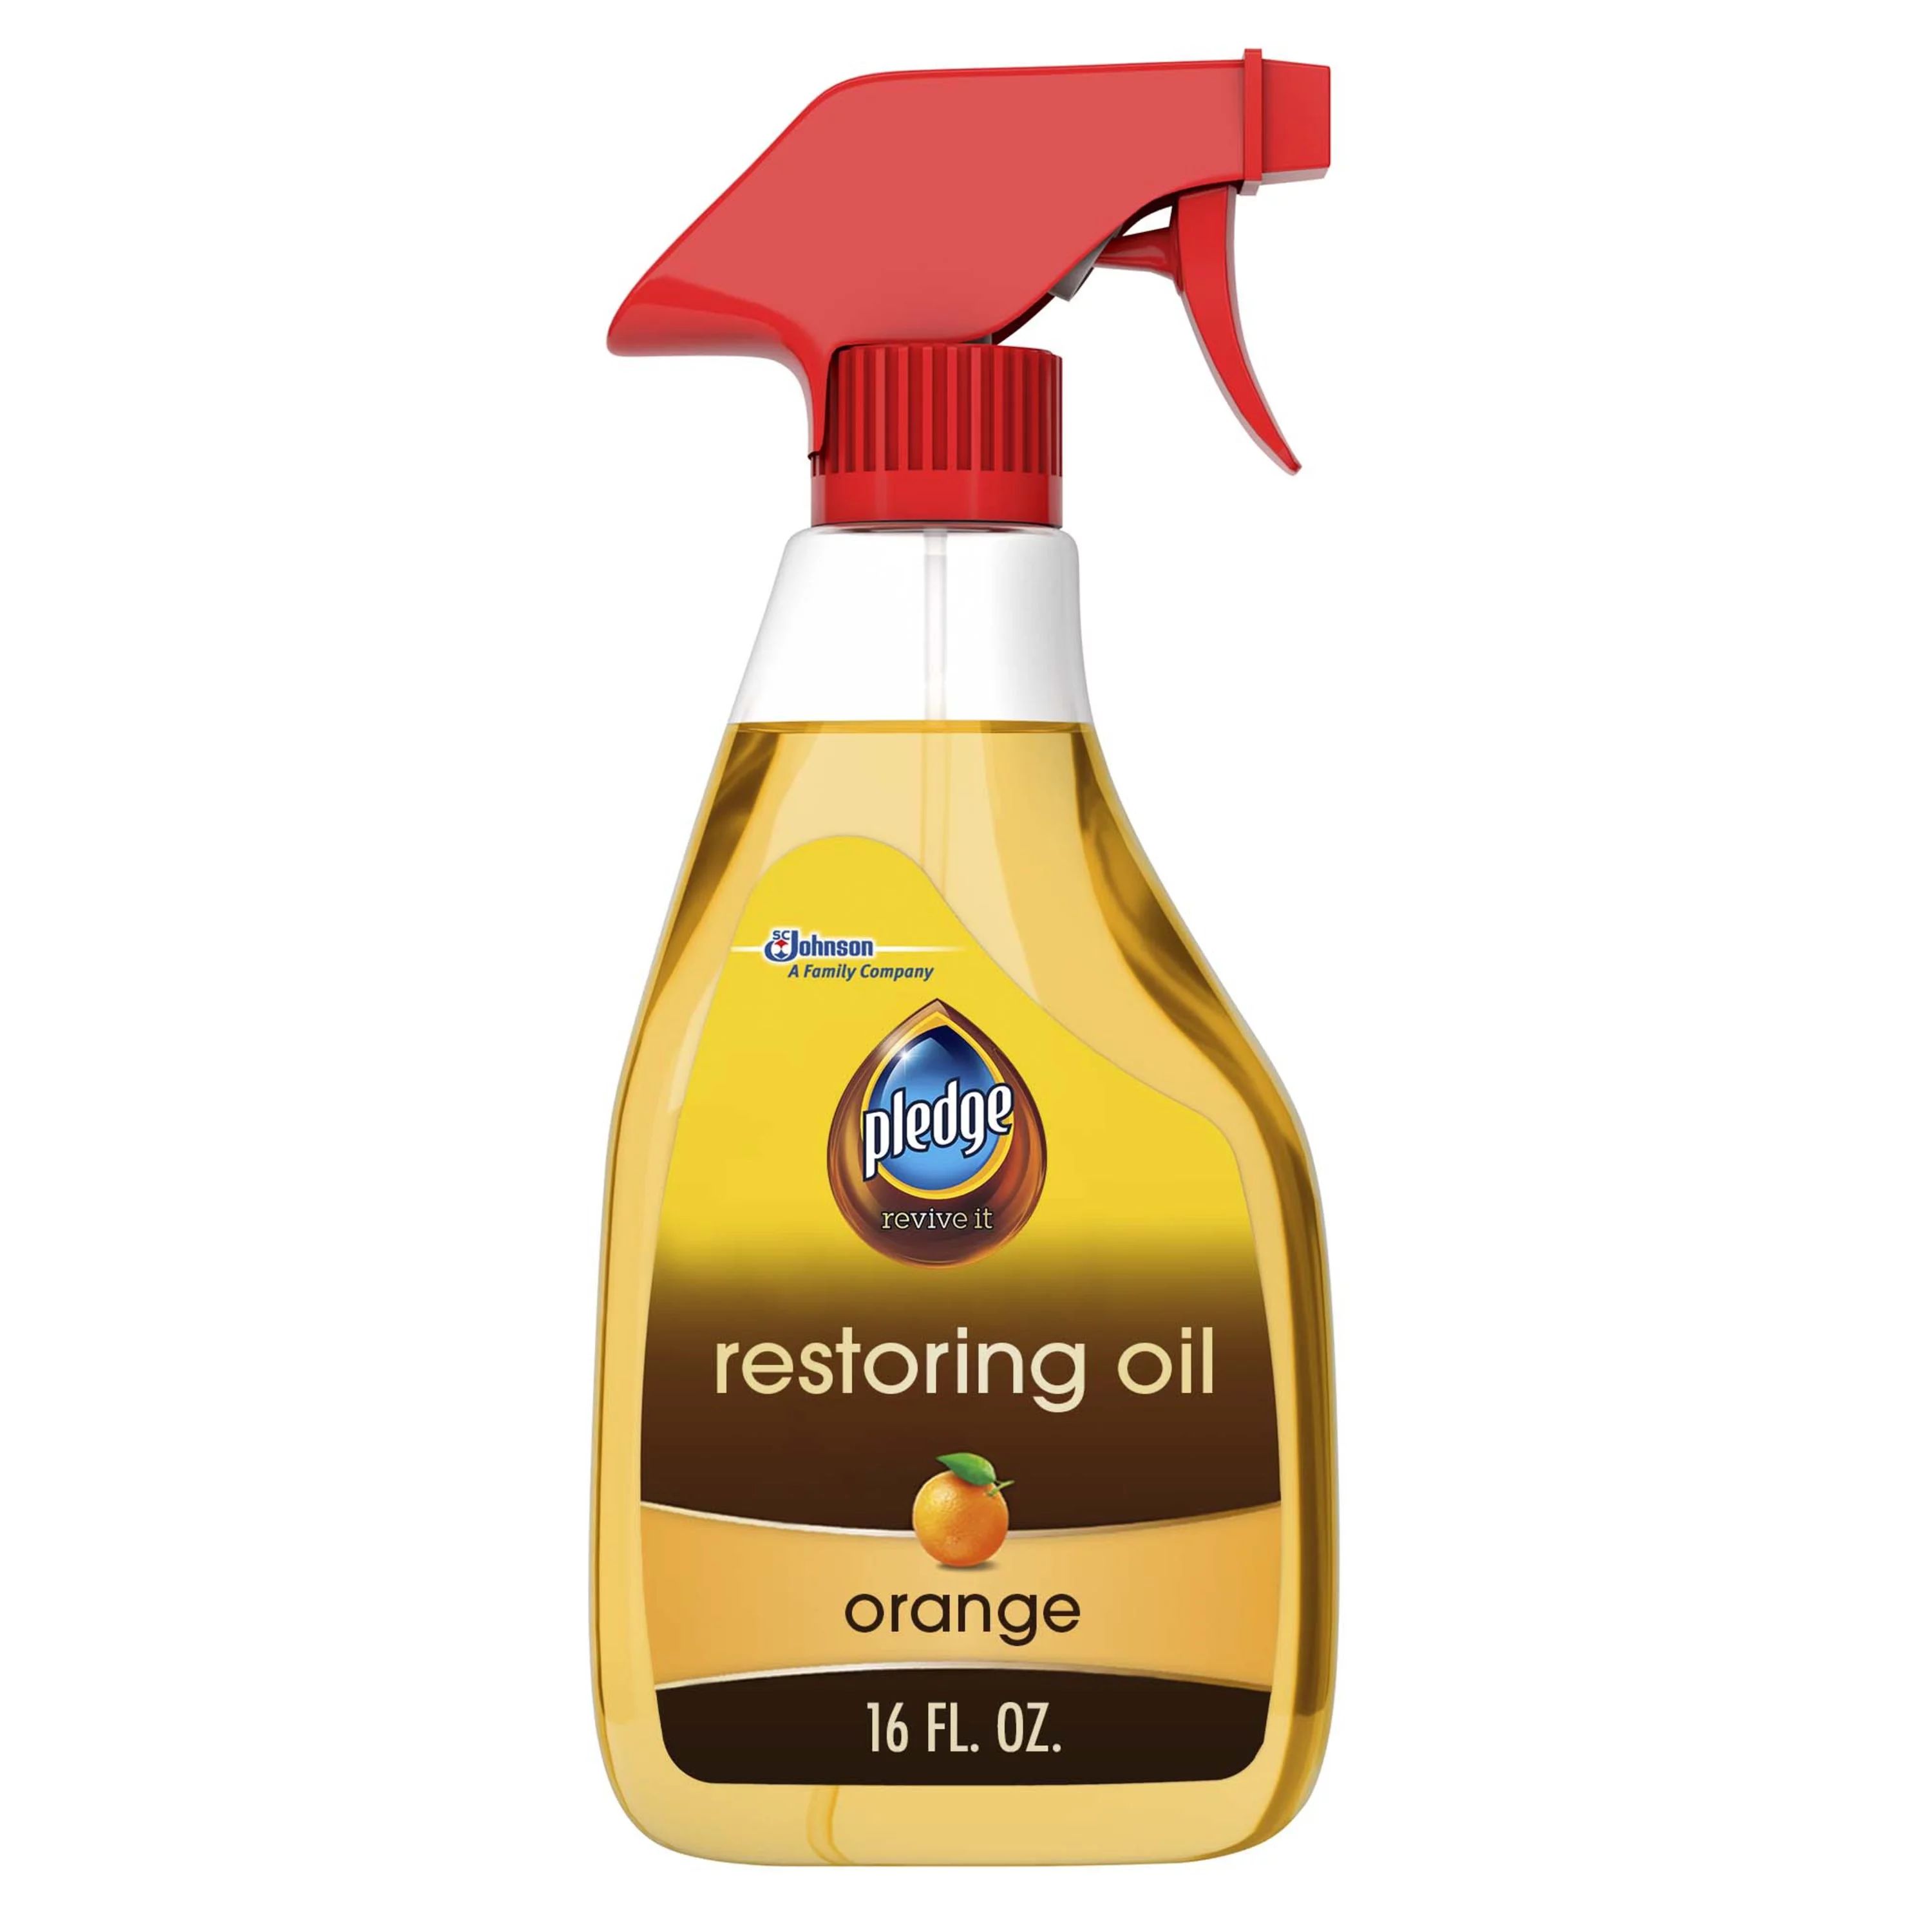 Pledge Restoring Oil Spray, Orange - Restore Sealed and Unsealed Wood Surfaces (1 Trigger Spray),... | Walmart (US)